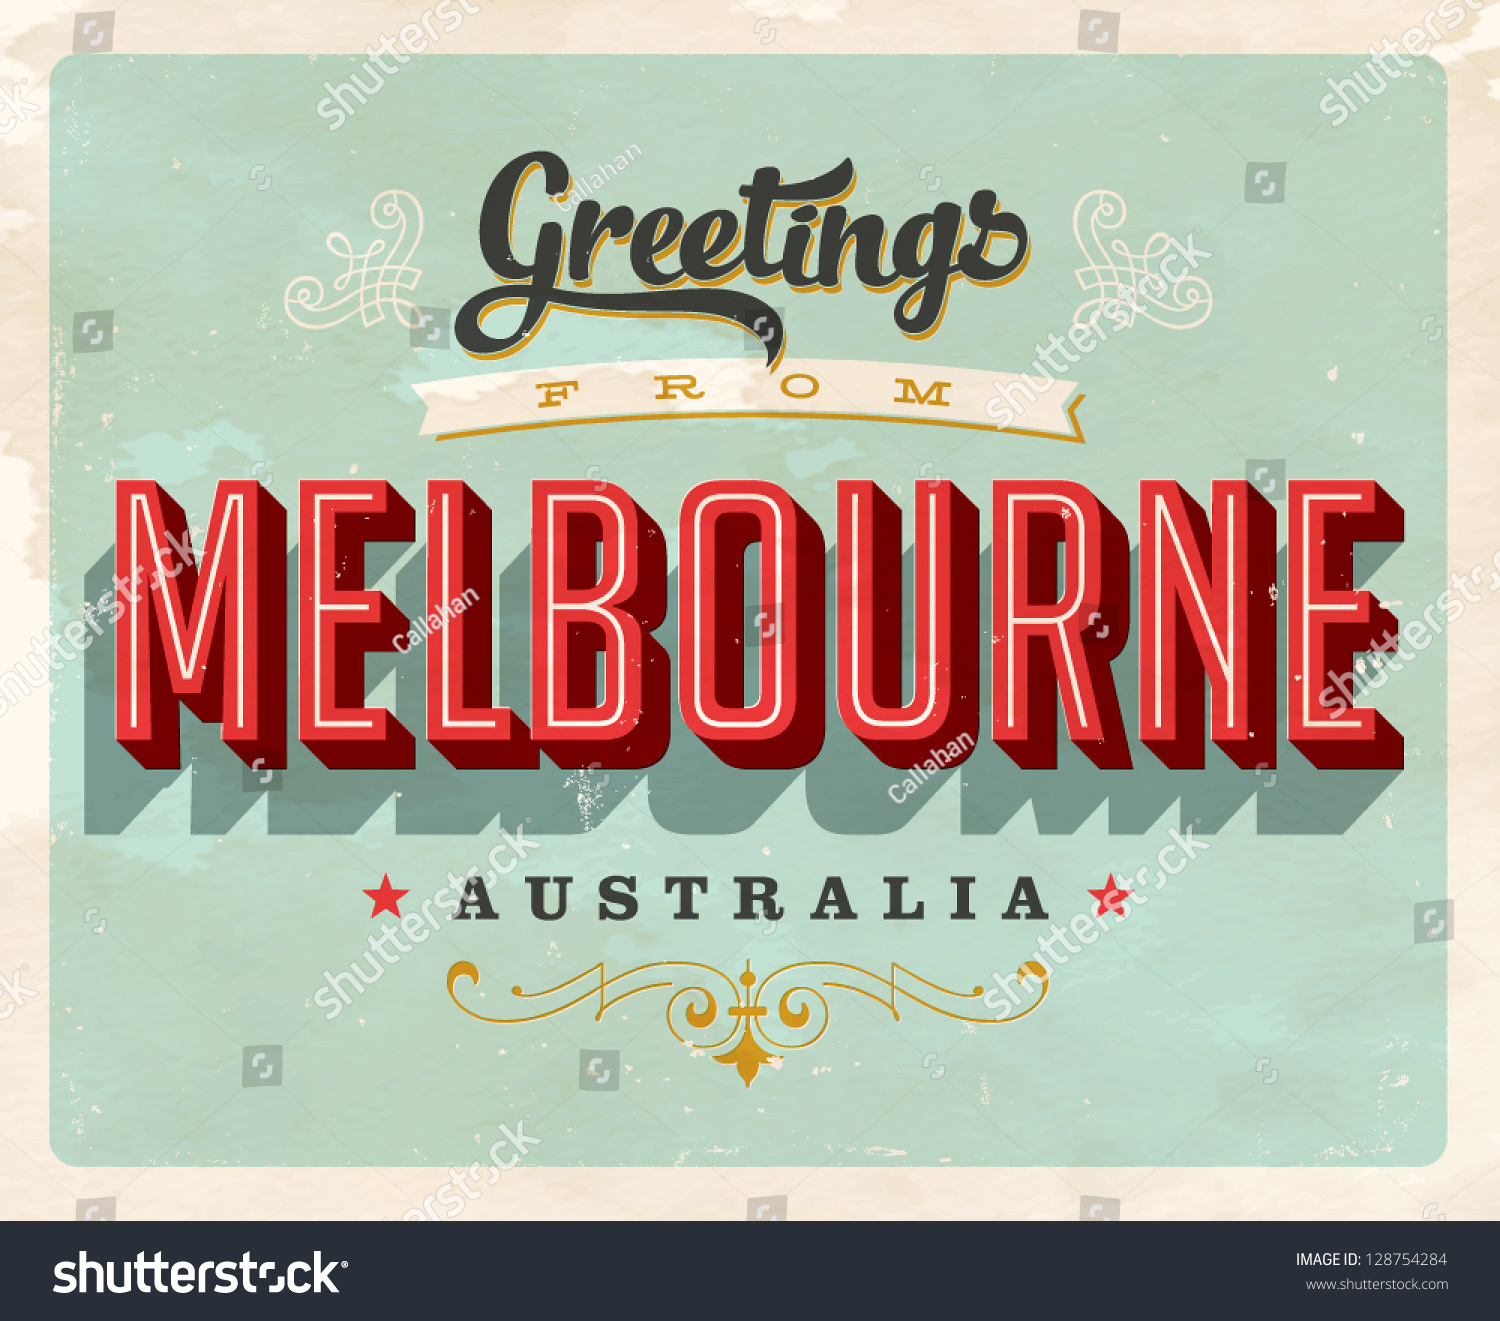 Vintage Touristic Greeting Card - Melbourne, Australia - Vector Eps10 ...